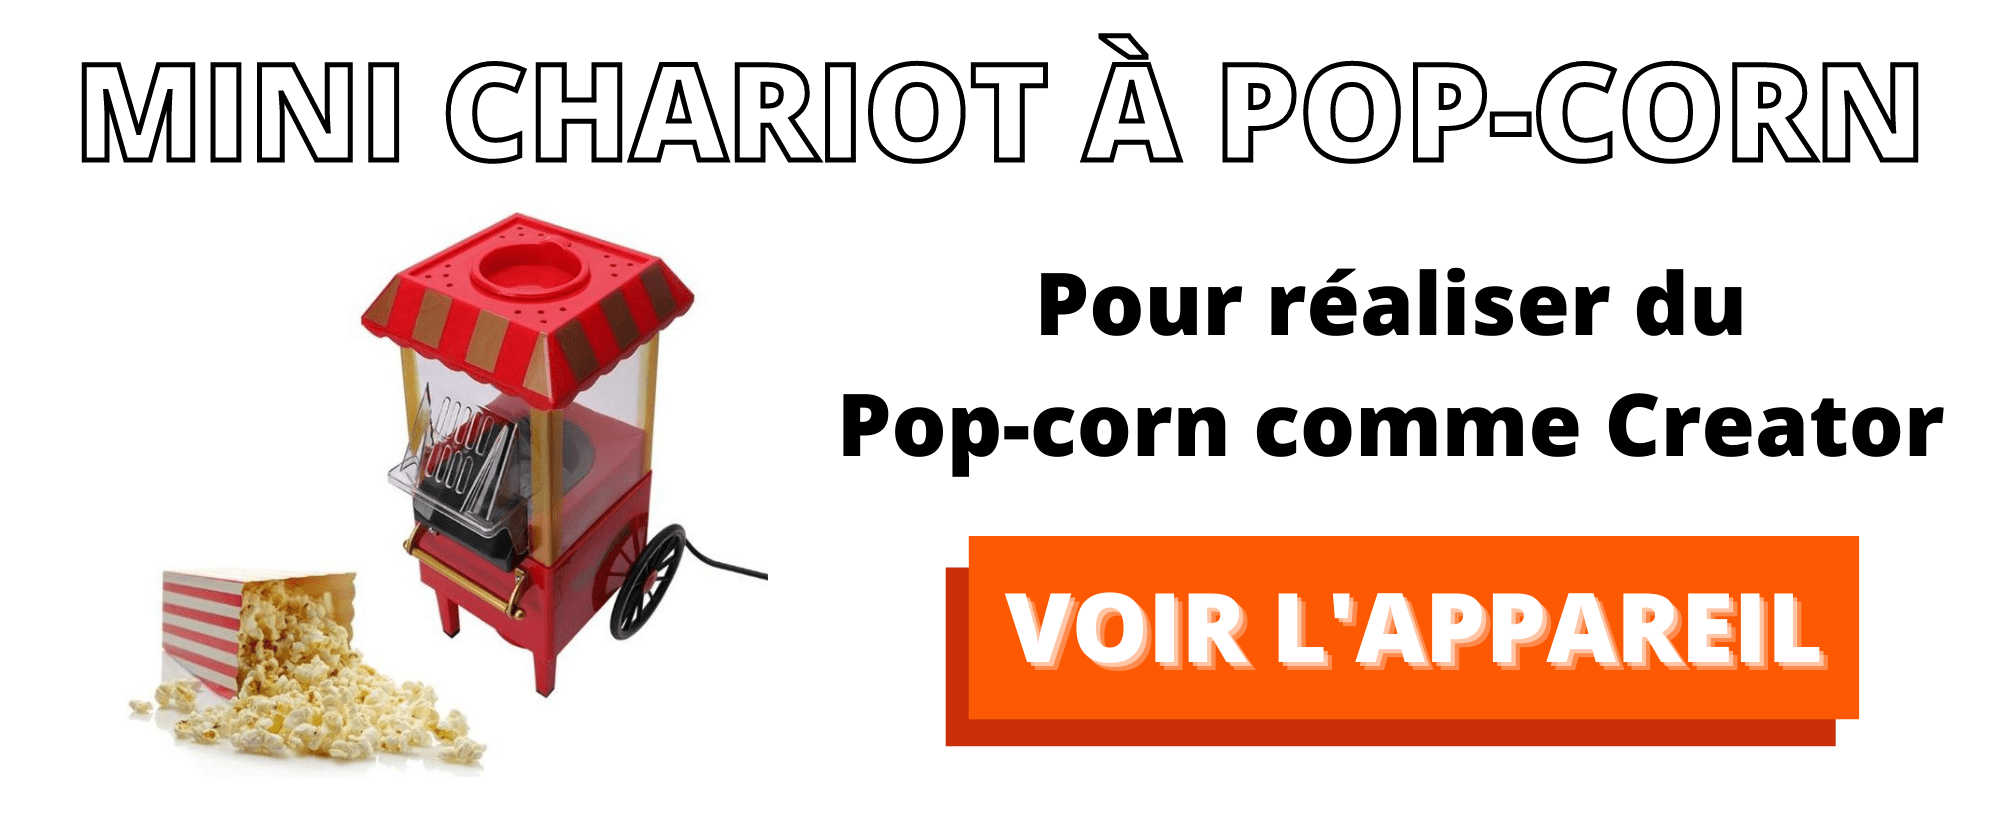 machine a pop-corn chariot